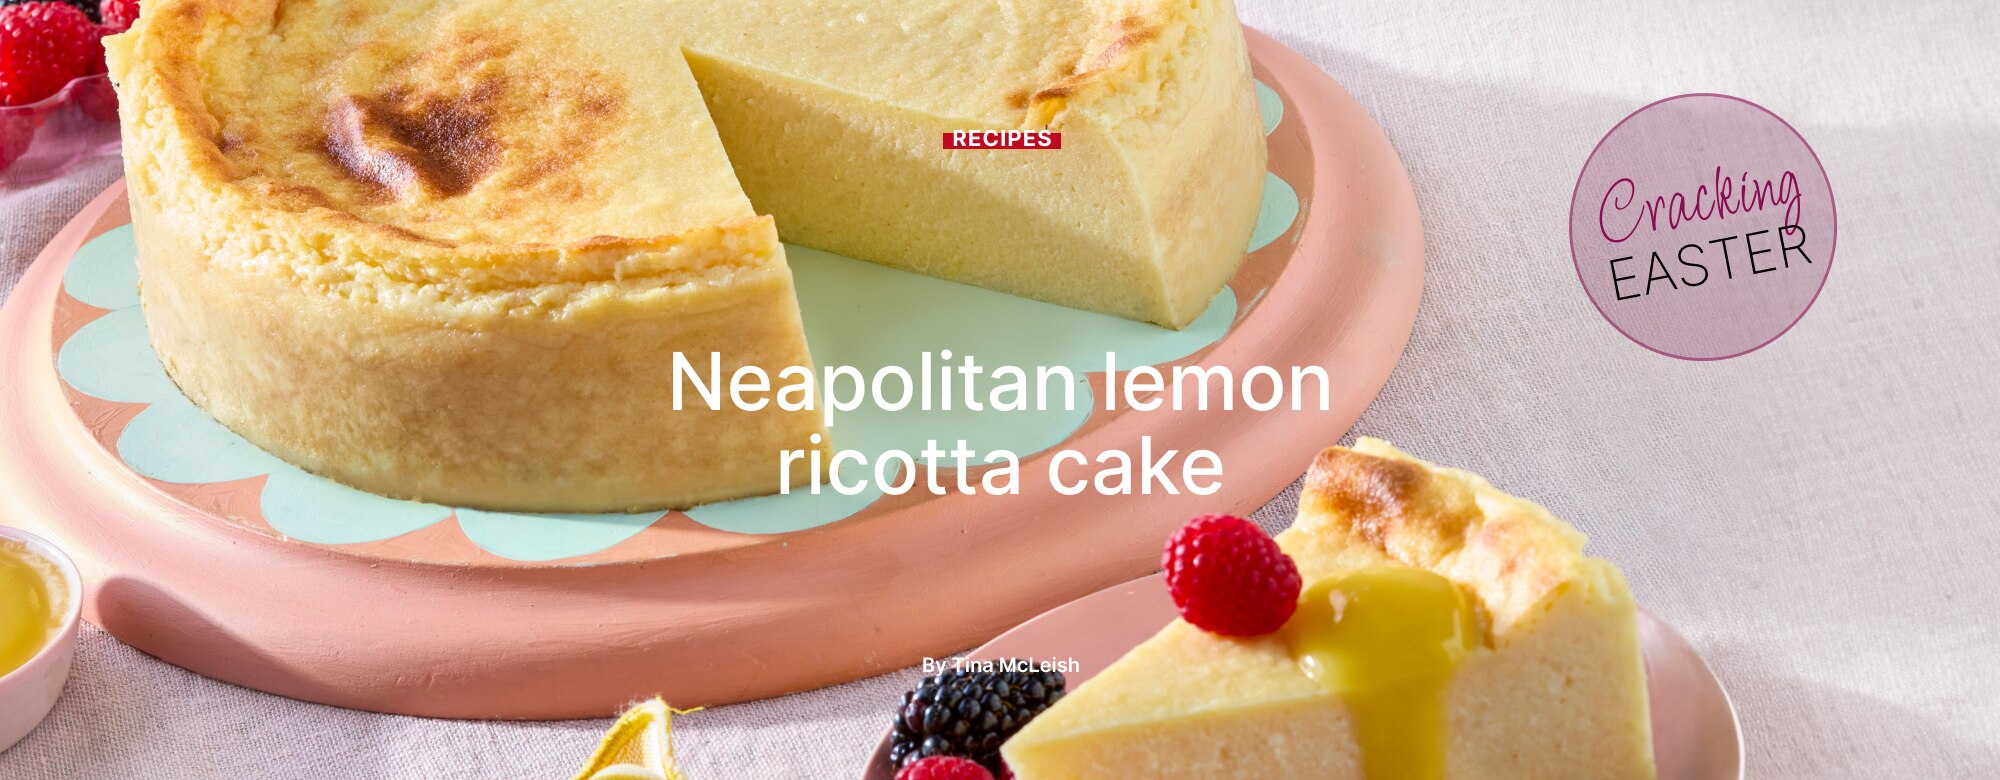 Neapolitan lemon ricotta cake